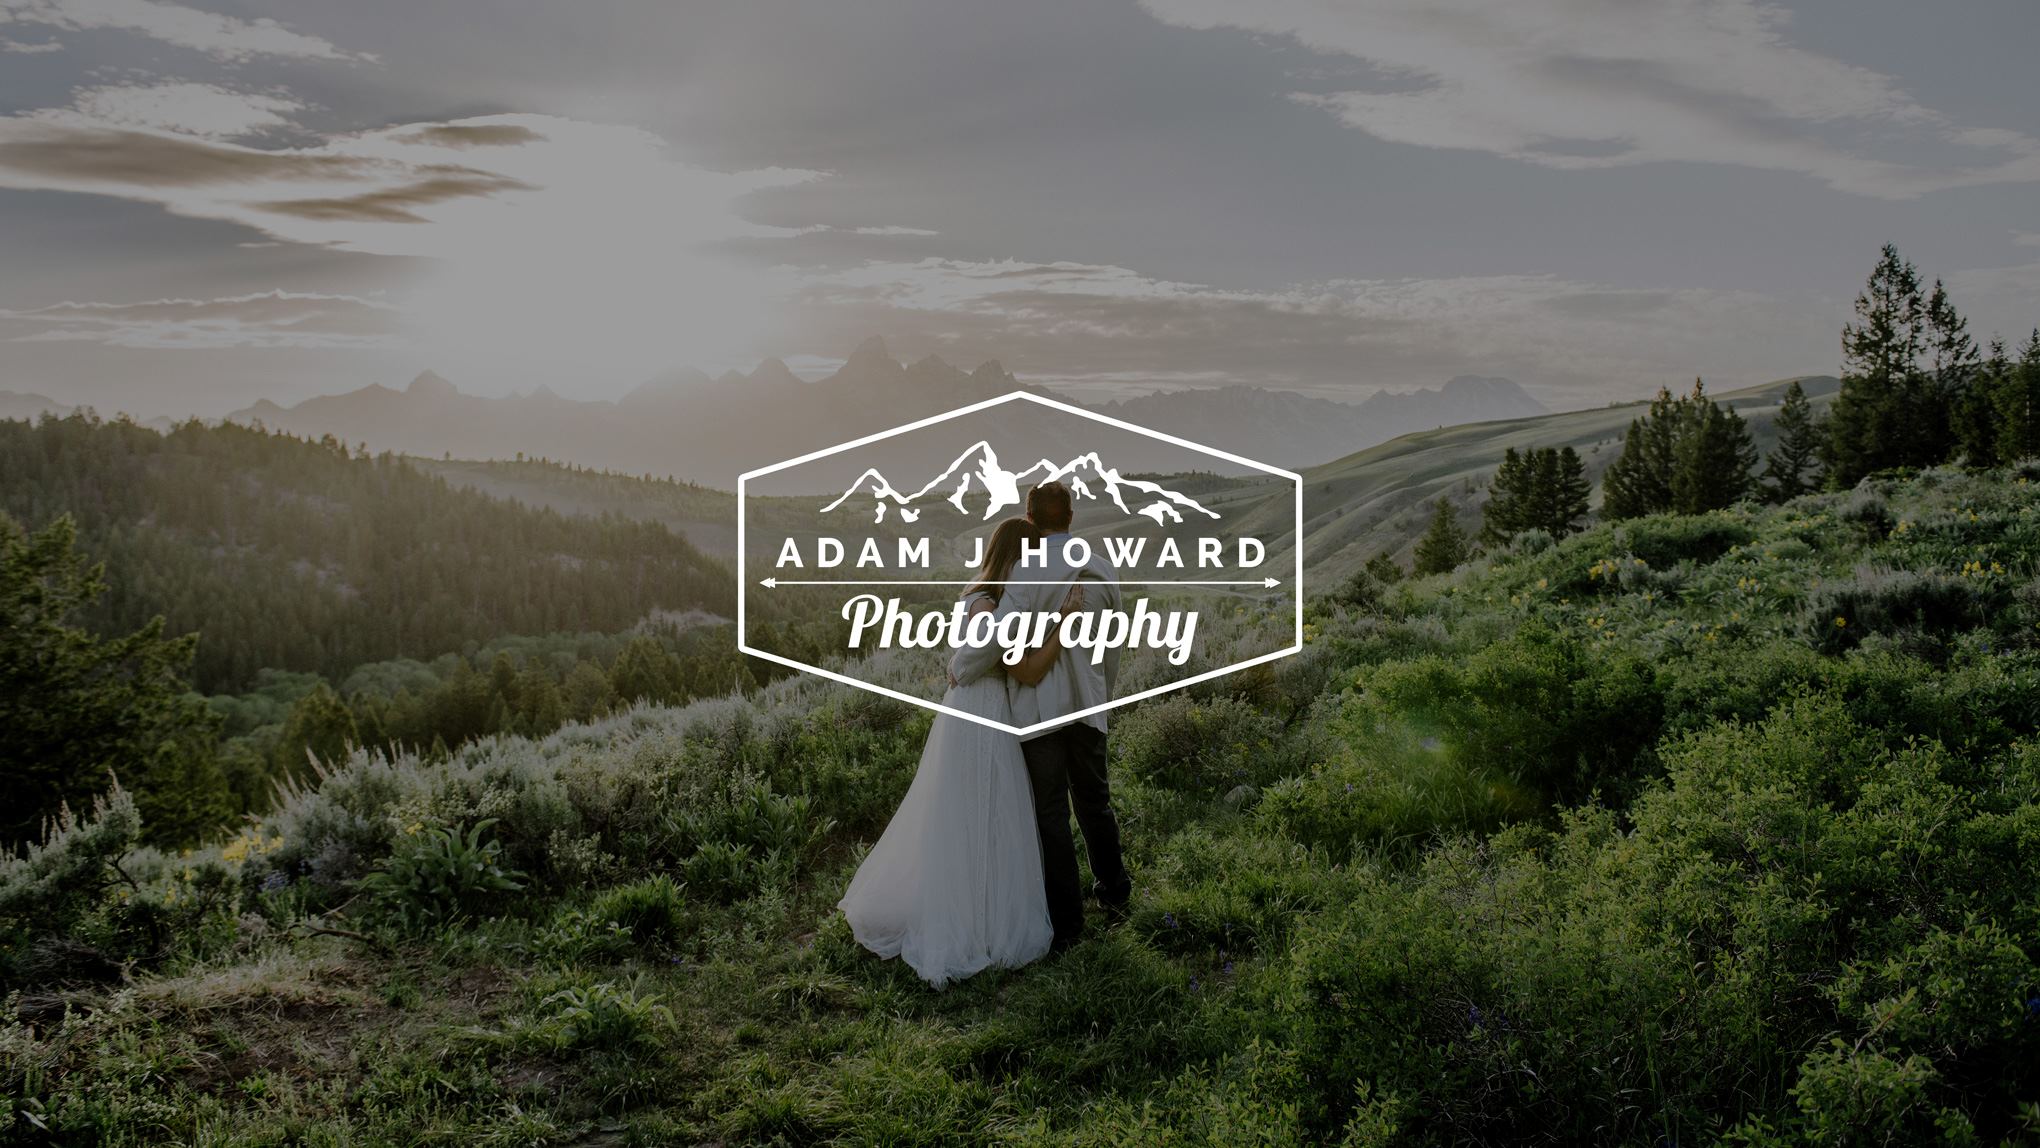 Adam J. Howard Wedding and Portrait Photography - 1